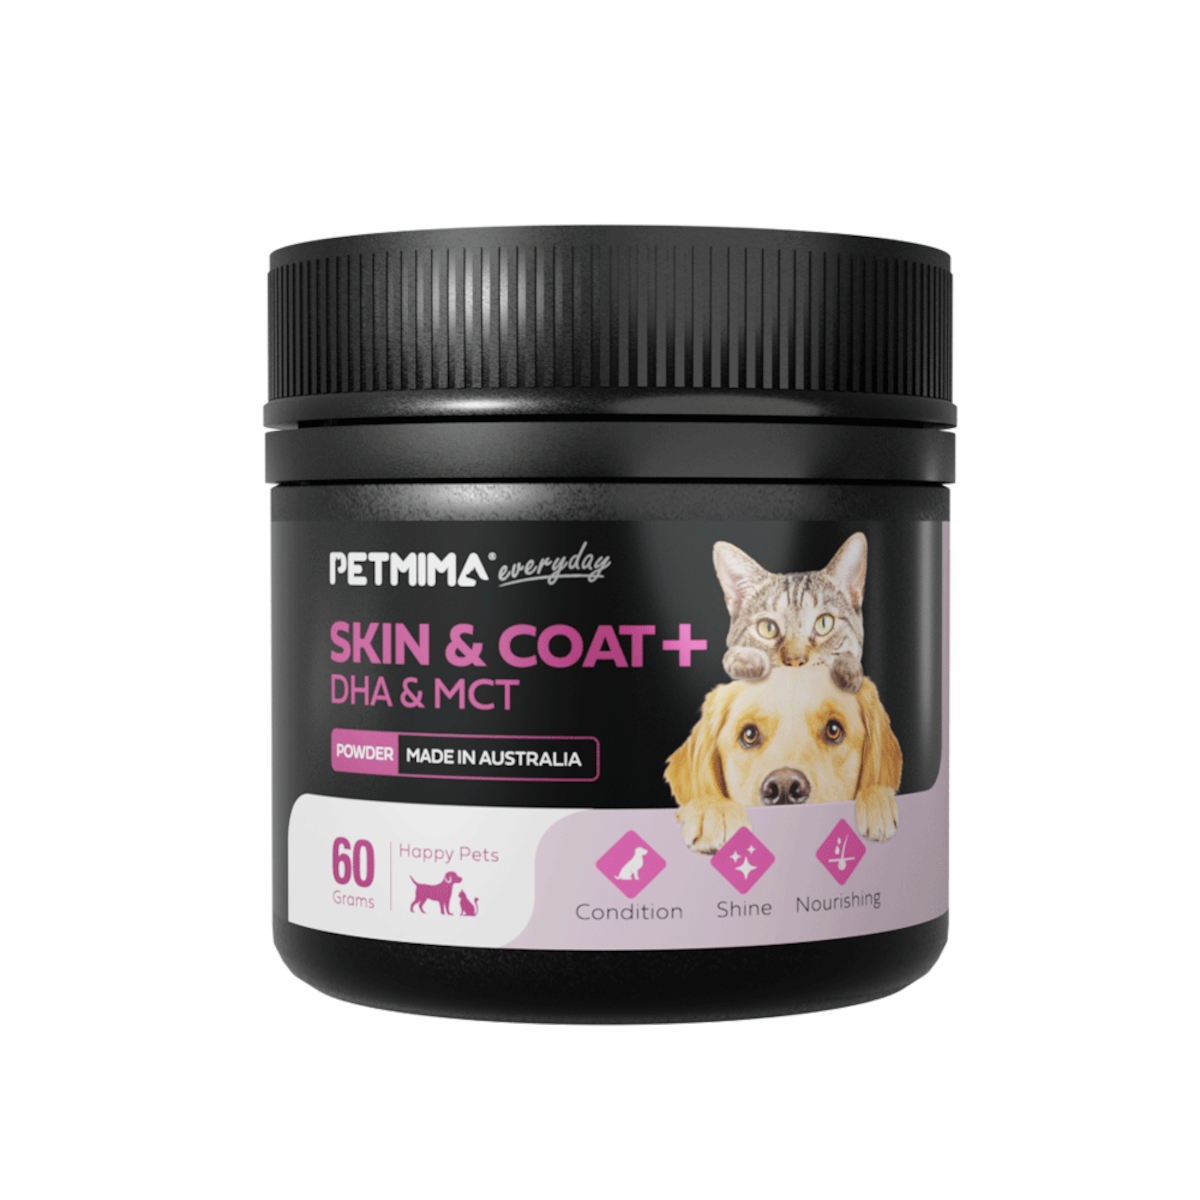 Petmima Skin & Coat + DHA & MCT 60g